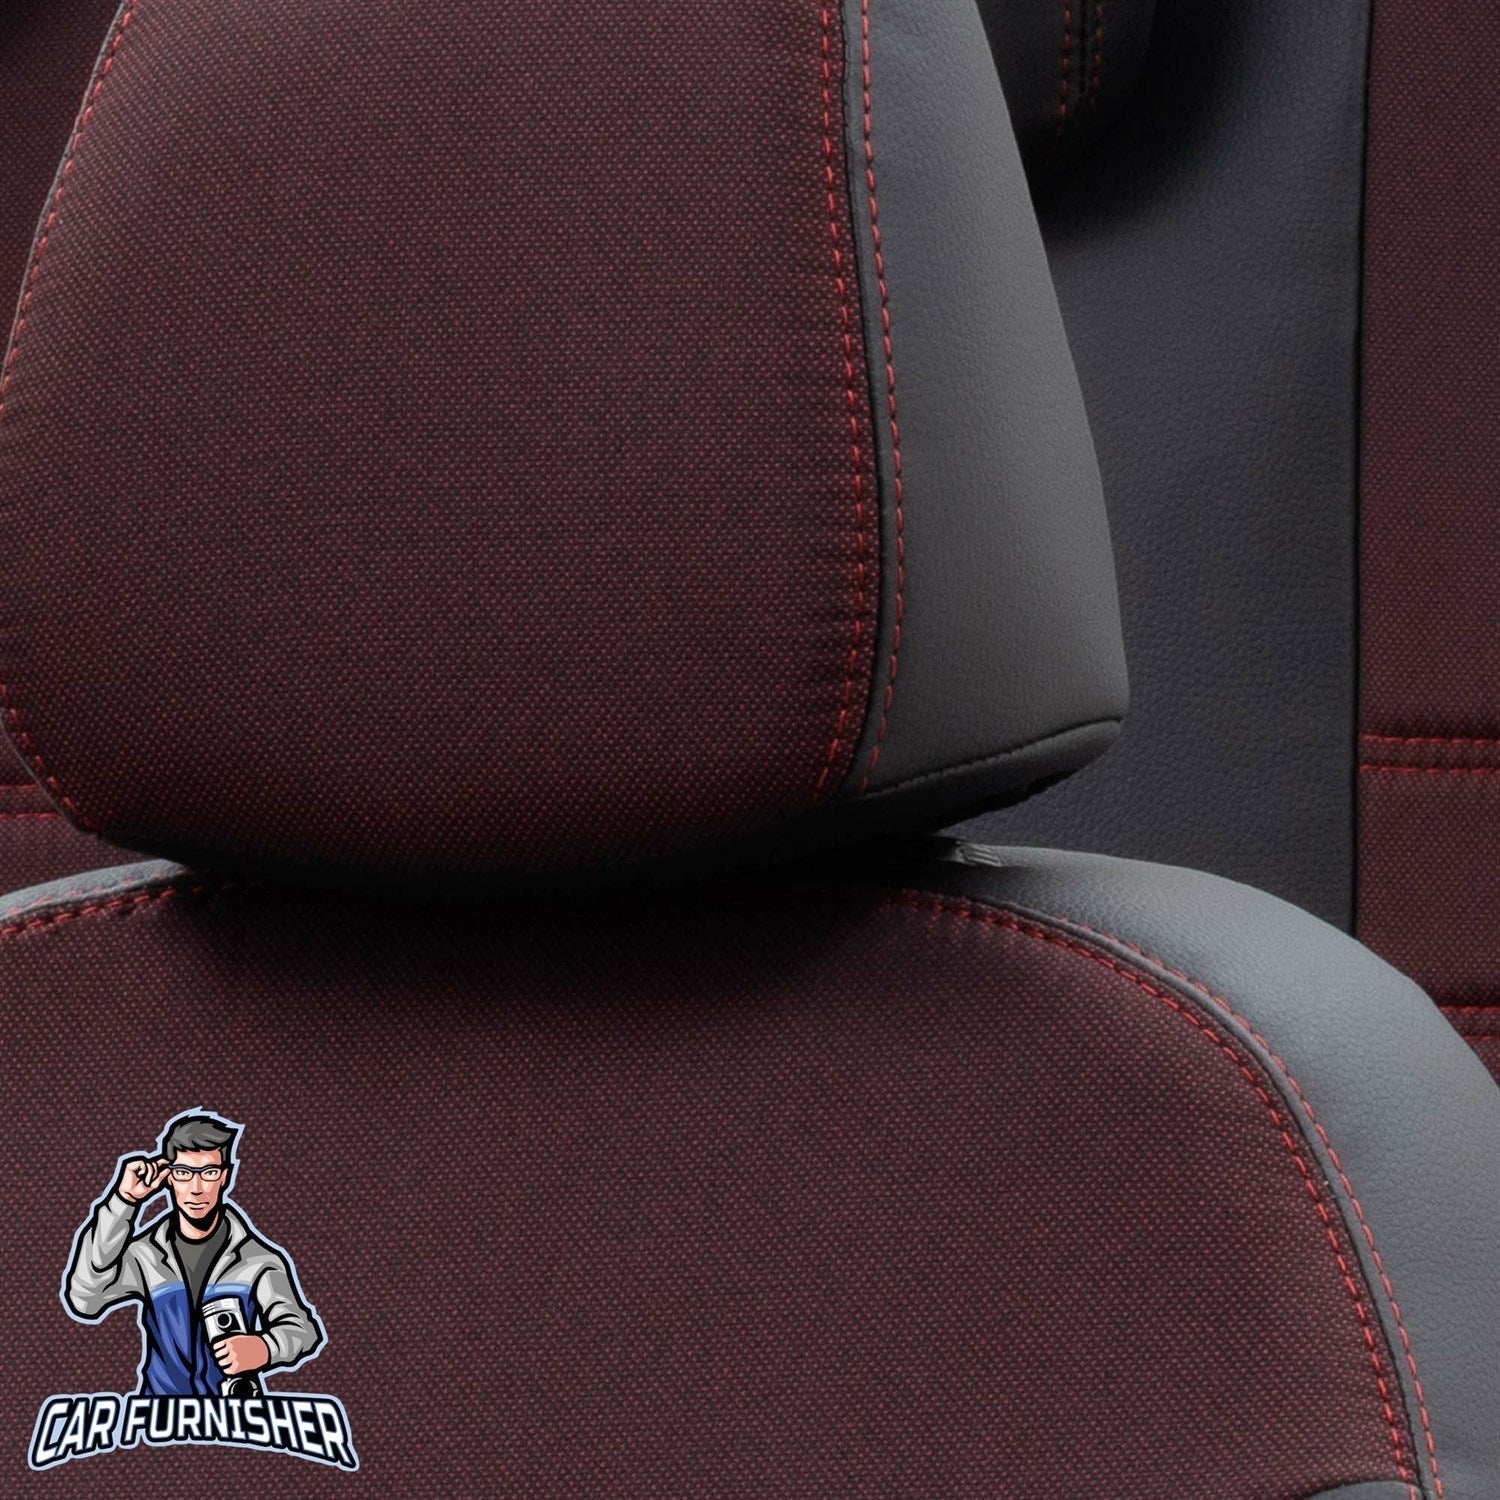 Kia Sorento Seat Covers Paris Leather & Jacquard Design Red Leather & Jacquard Fabric